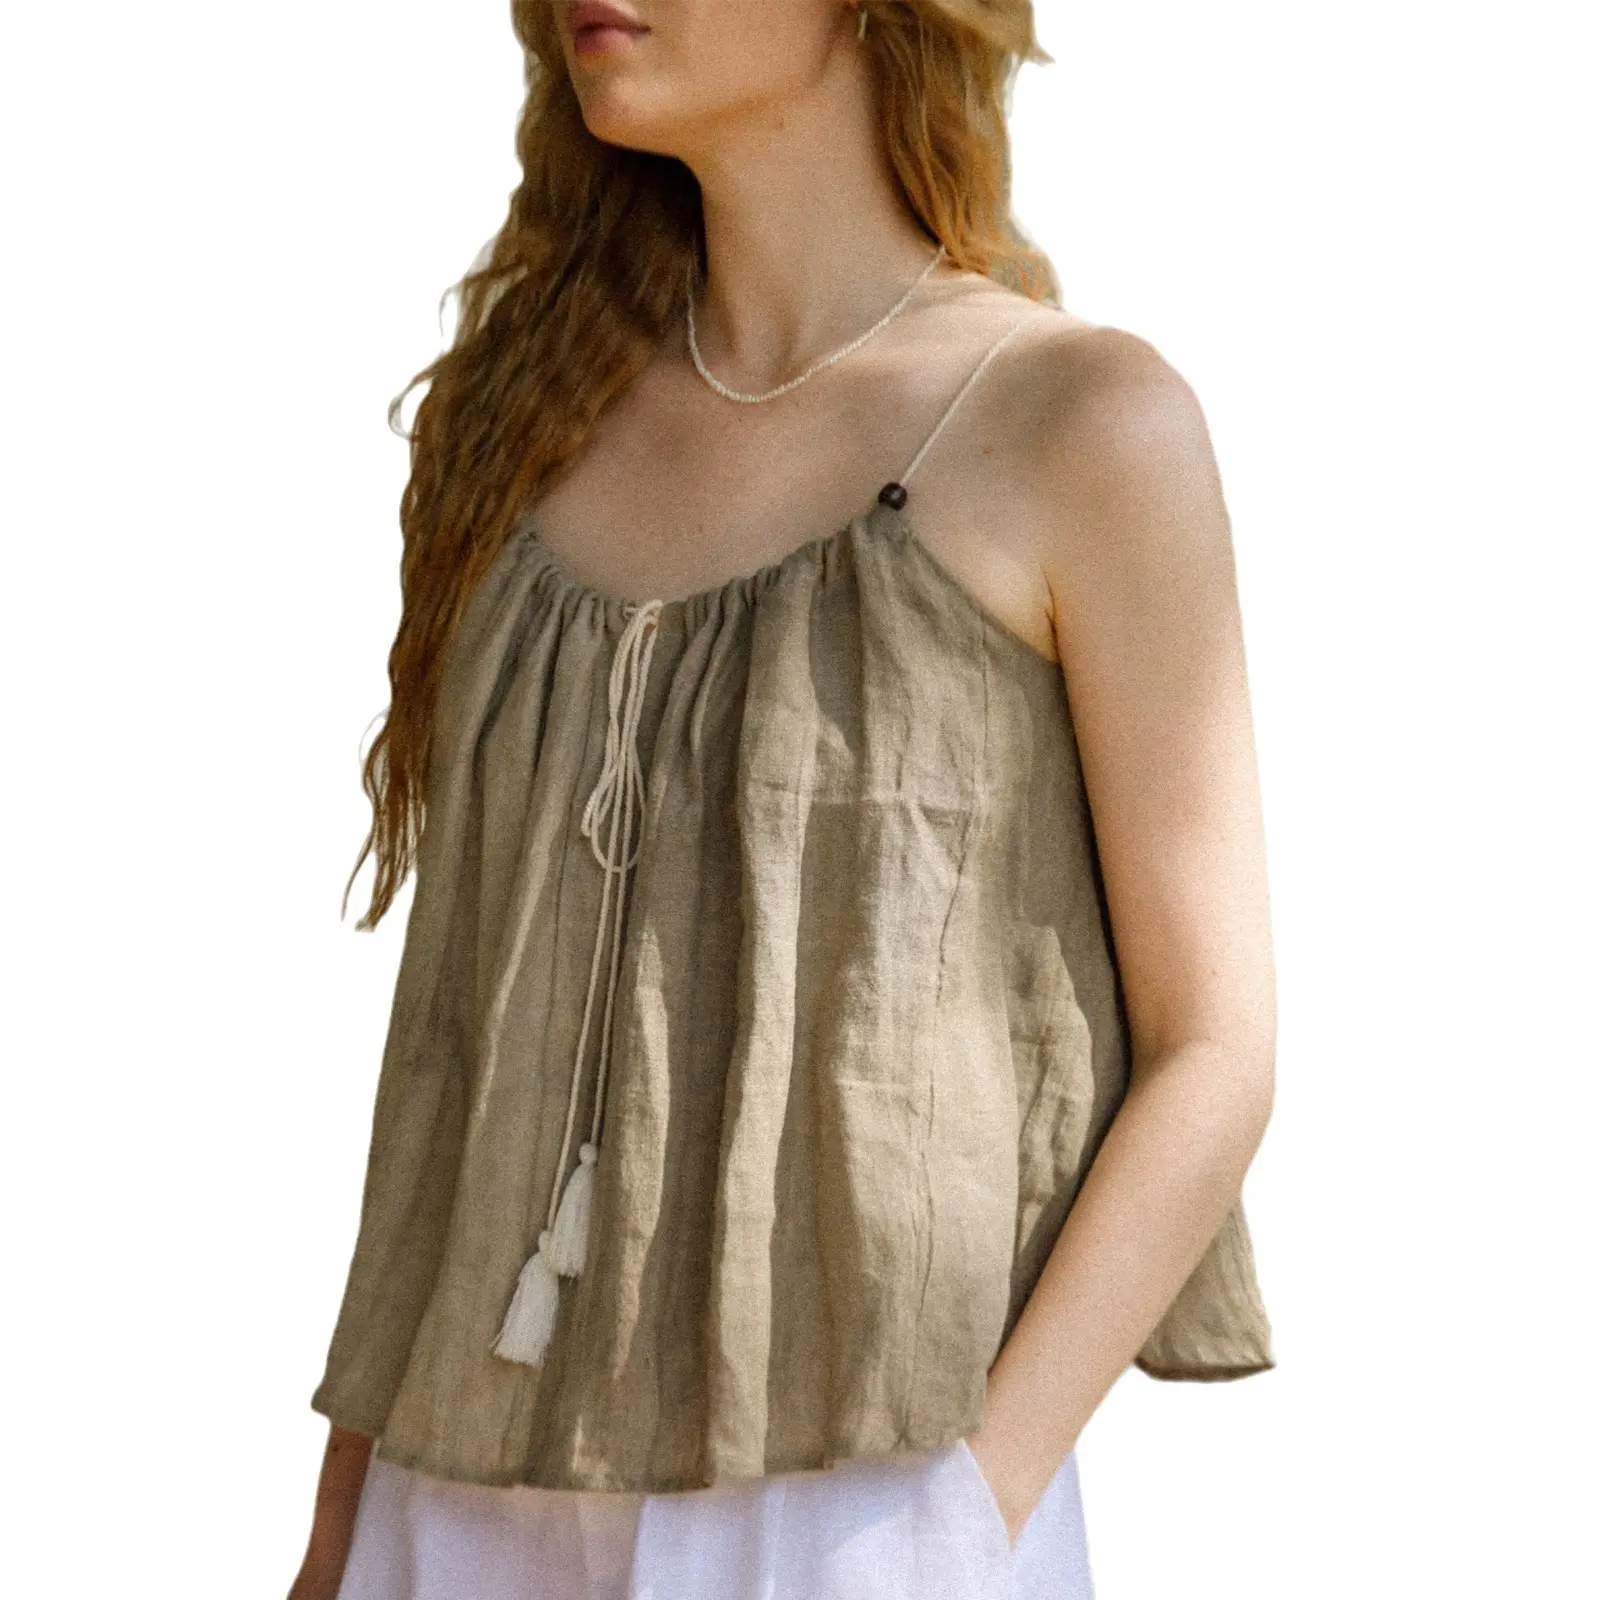 Pakaian wanita ukuran Plus sederhana blus Linen 100% musim panas atasan elegan modis tanpa lengan selempang